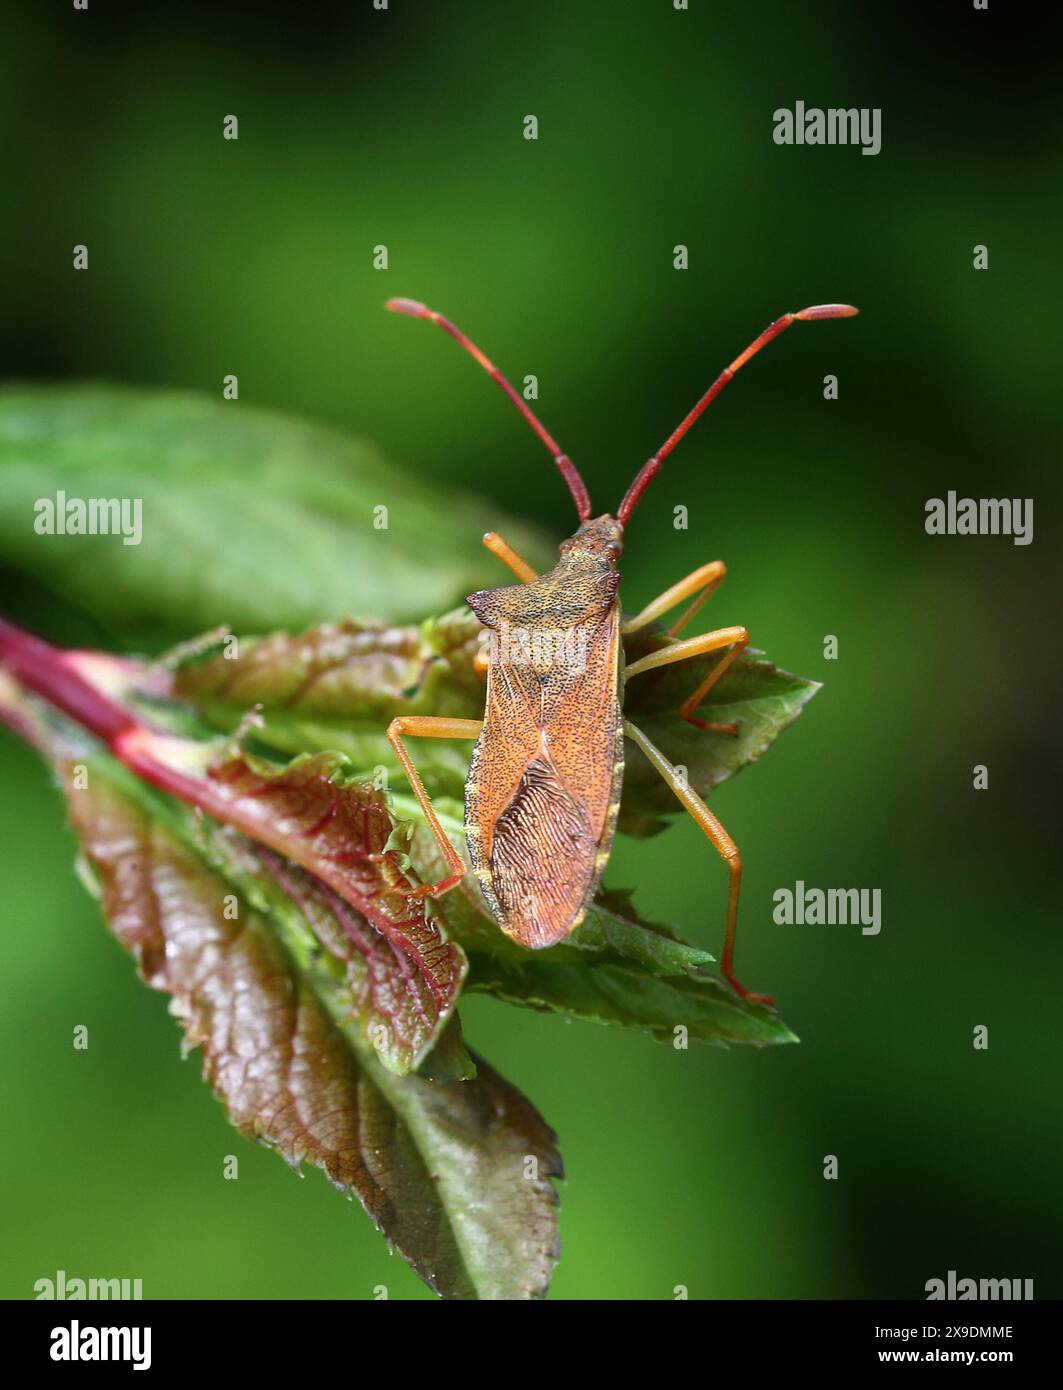 Box Bug, Gonocerus acuteangulatus, Coreidae. Un squashbug brun rougeâtre relativement grand. Banque D'Images